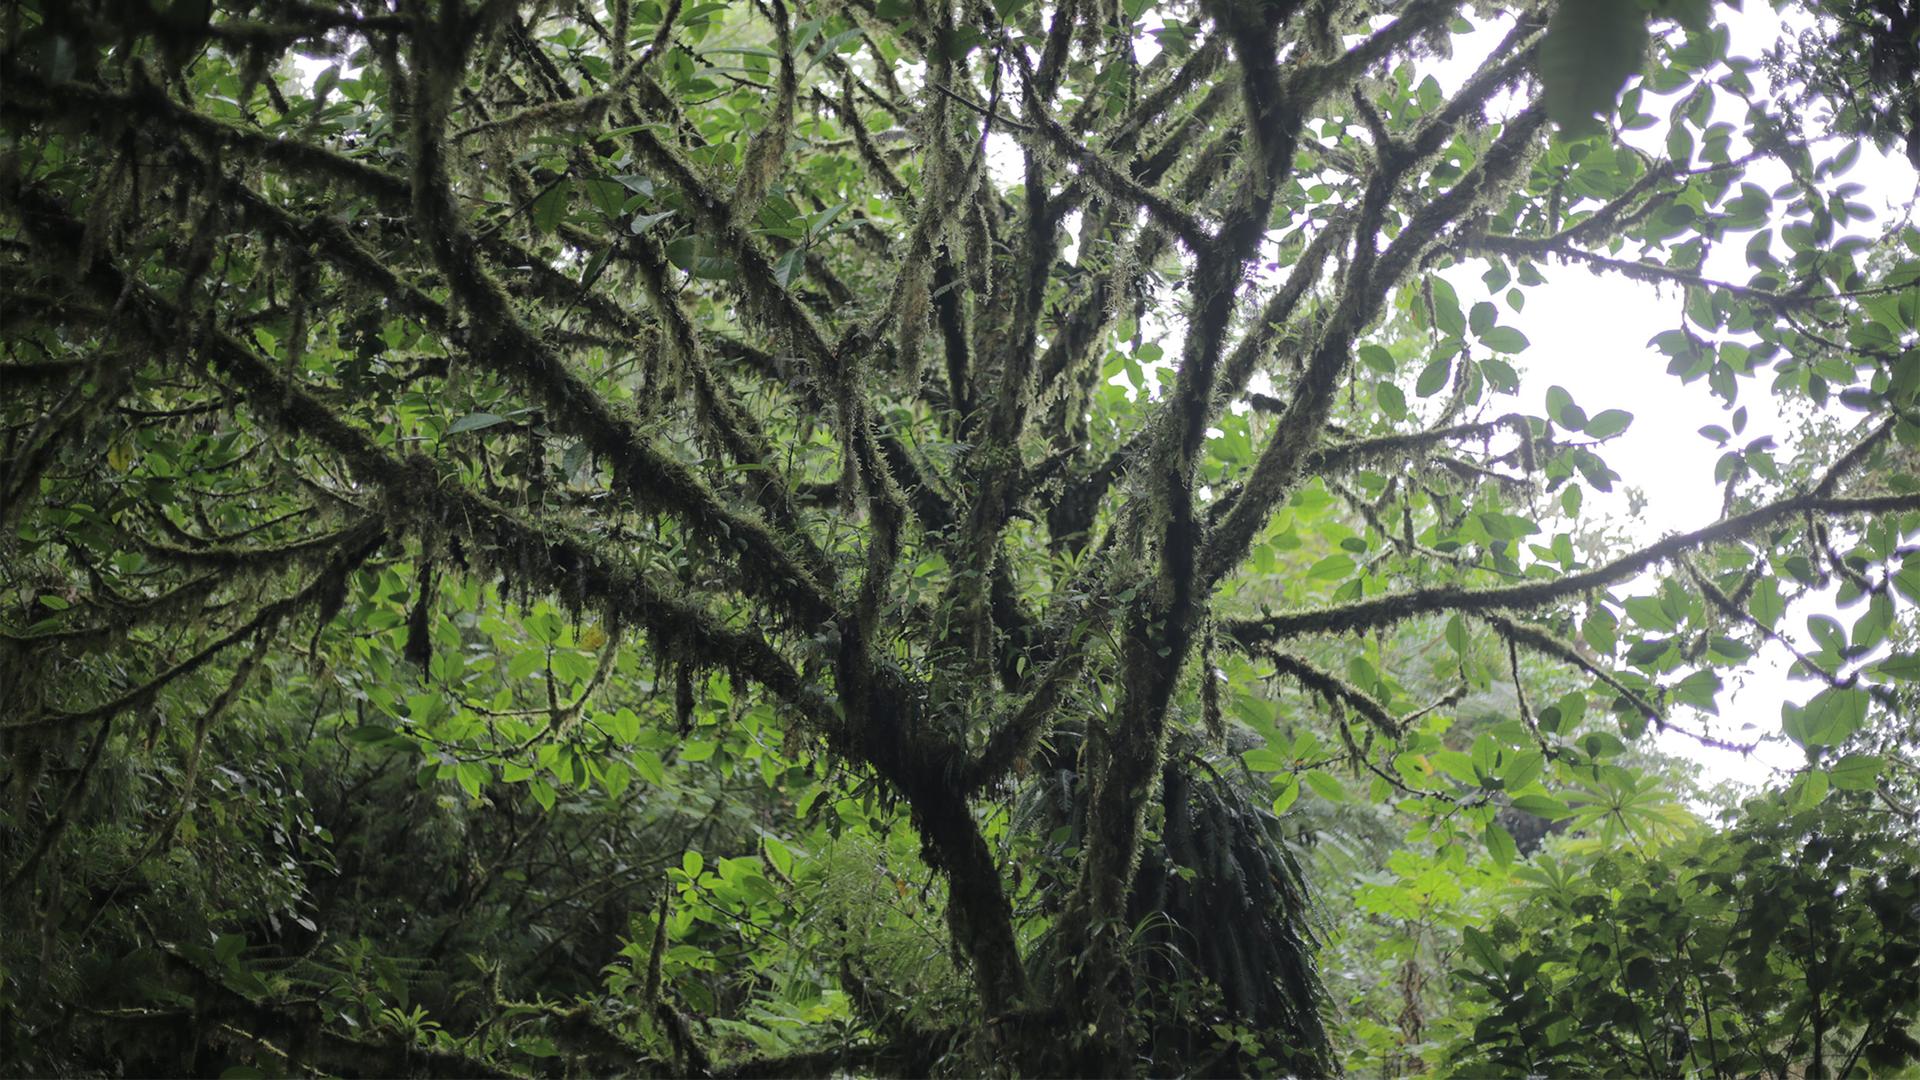 A tree in Costa Rica's Monteverde Cloud Forest Biological Preserve.